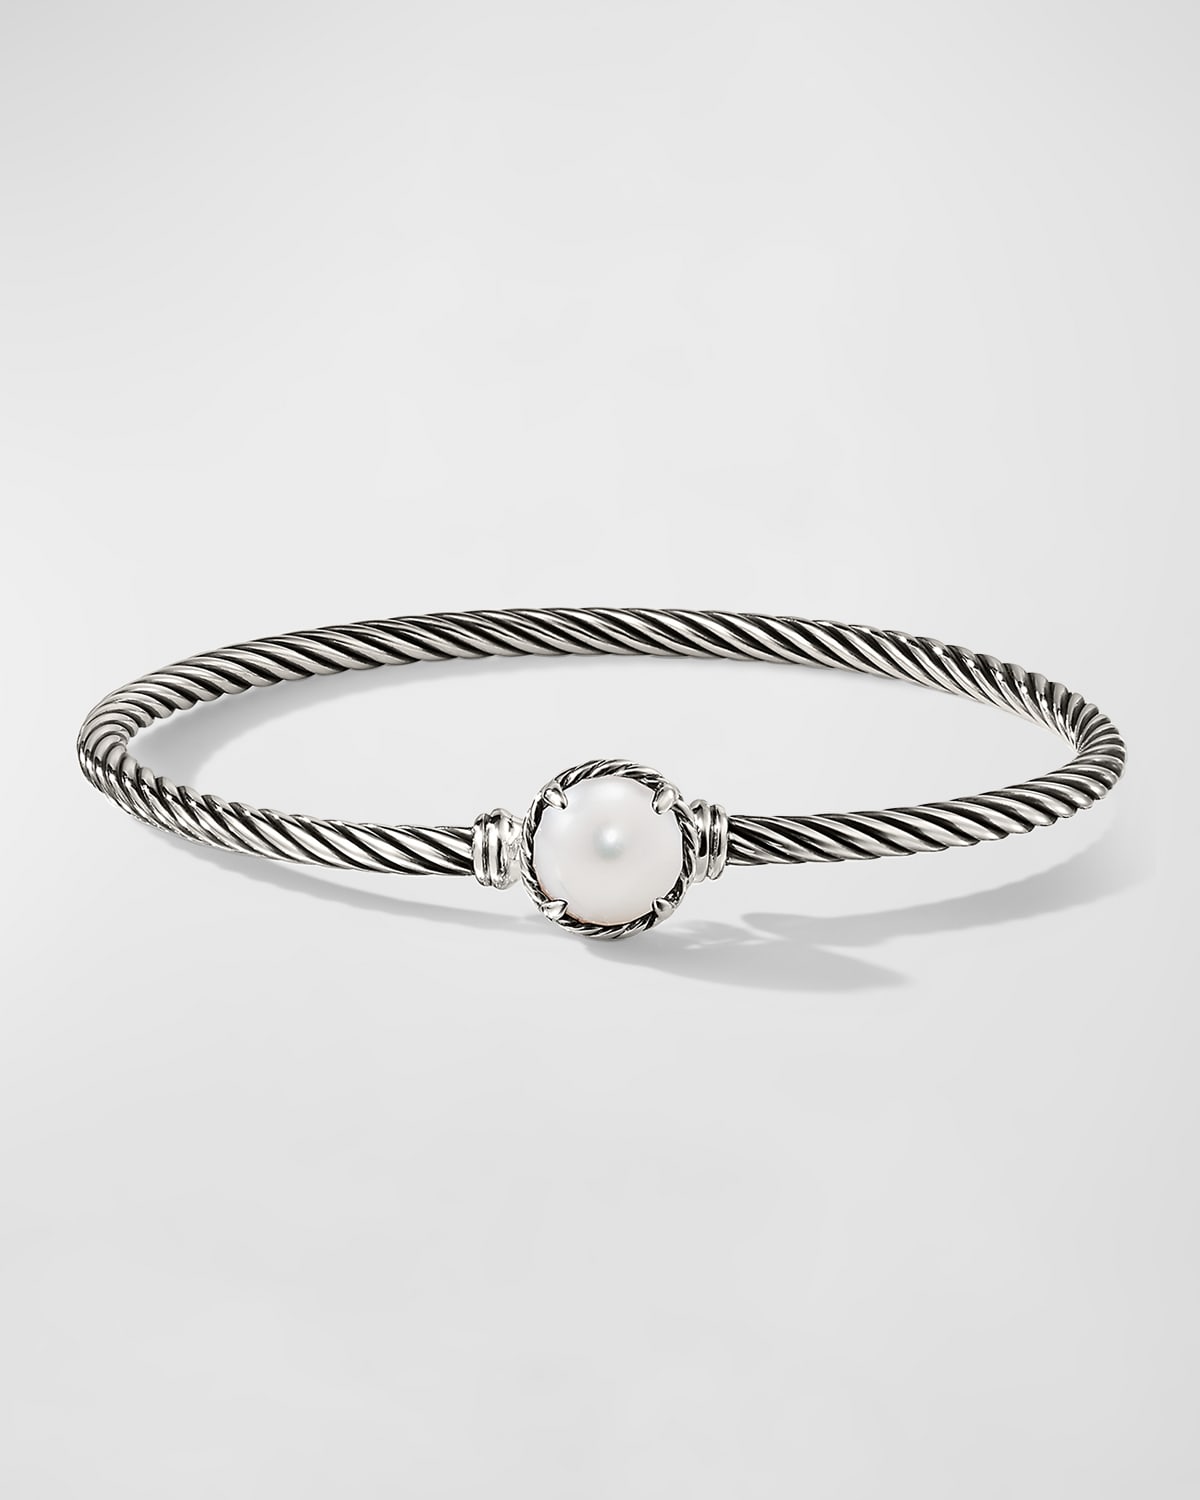 Petite Chatelaine Bracelet in Silver